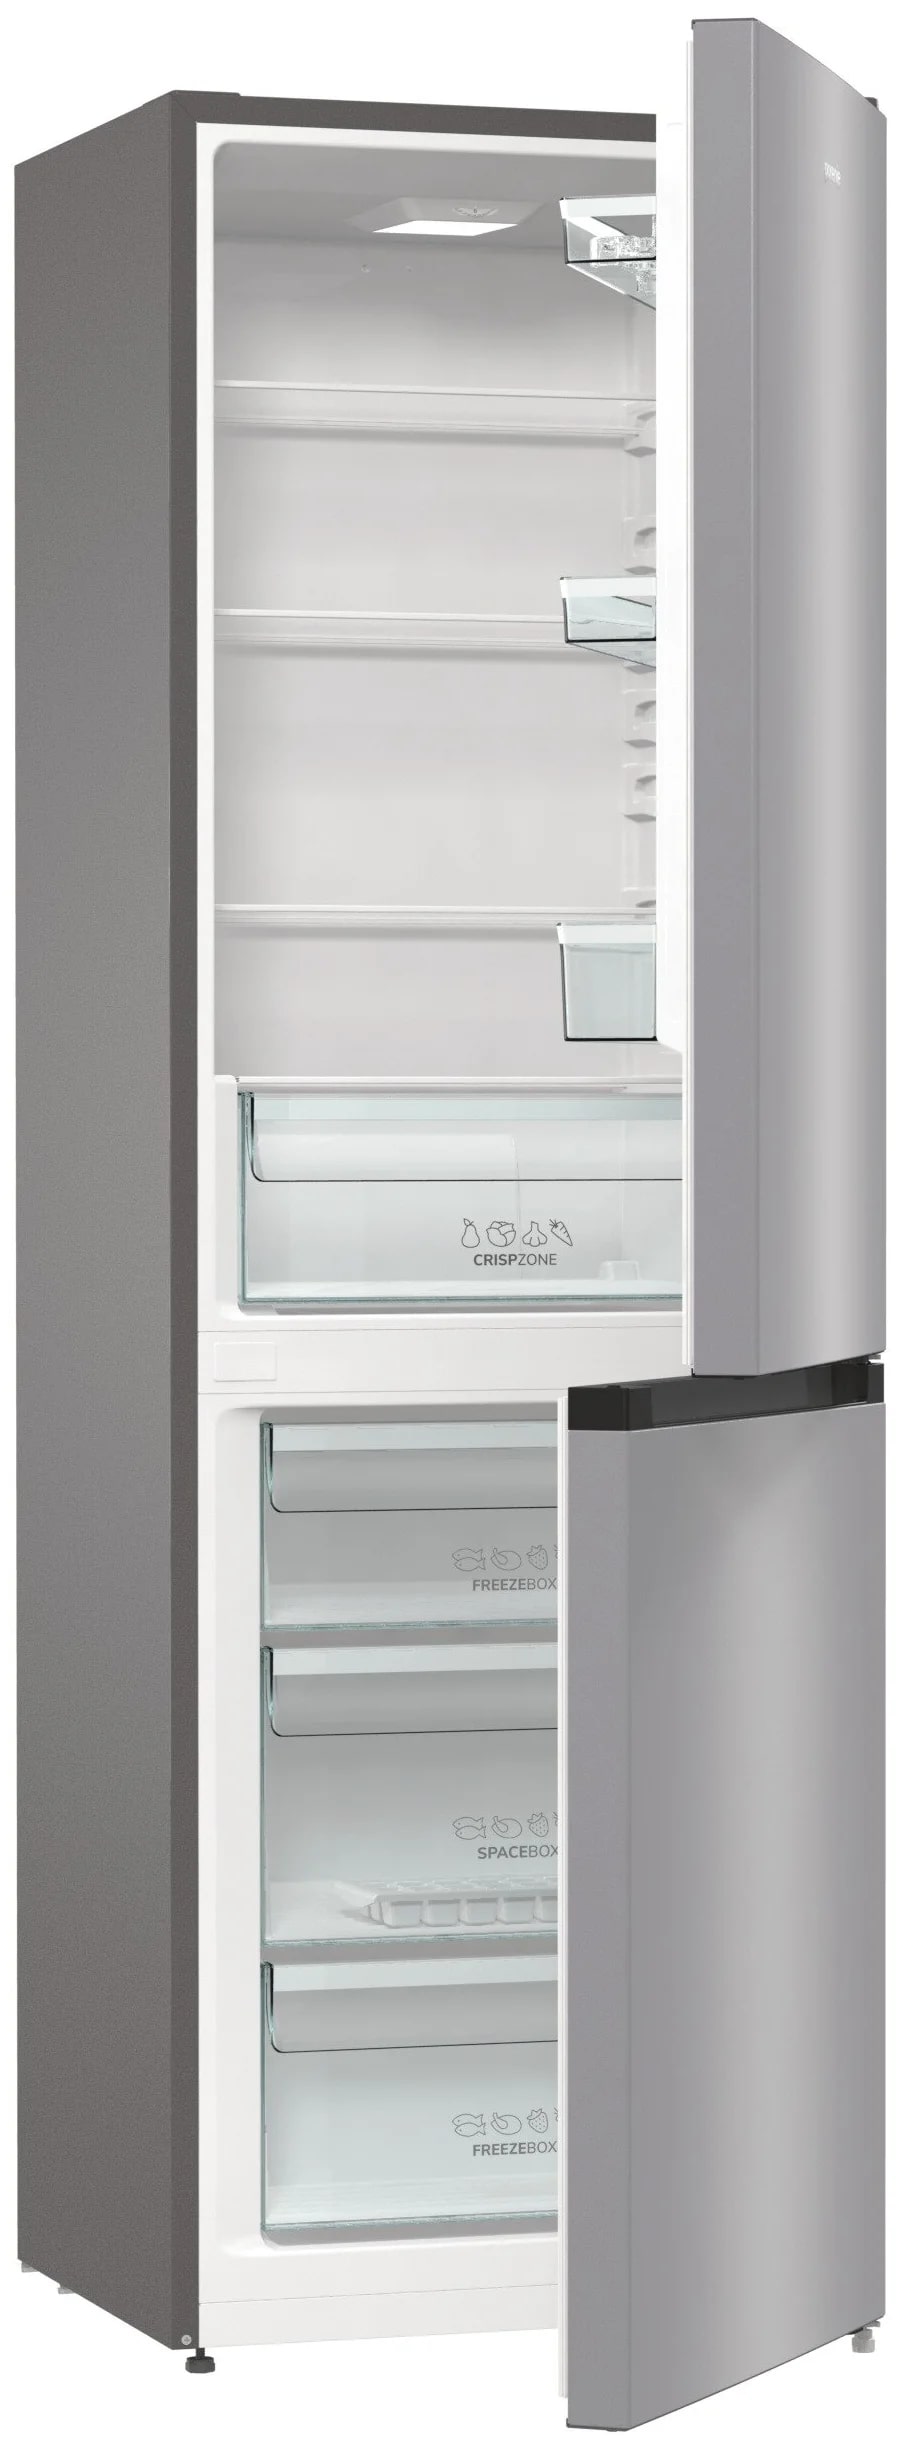 Холодильник Gorenje RK6191ES4, серебристый